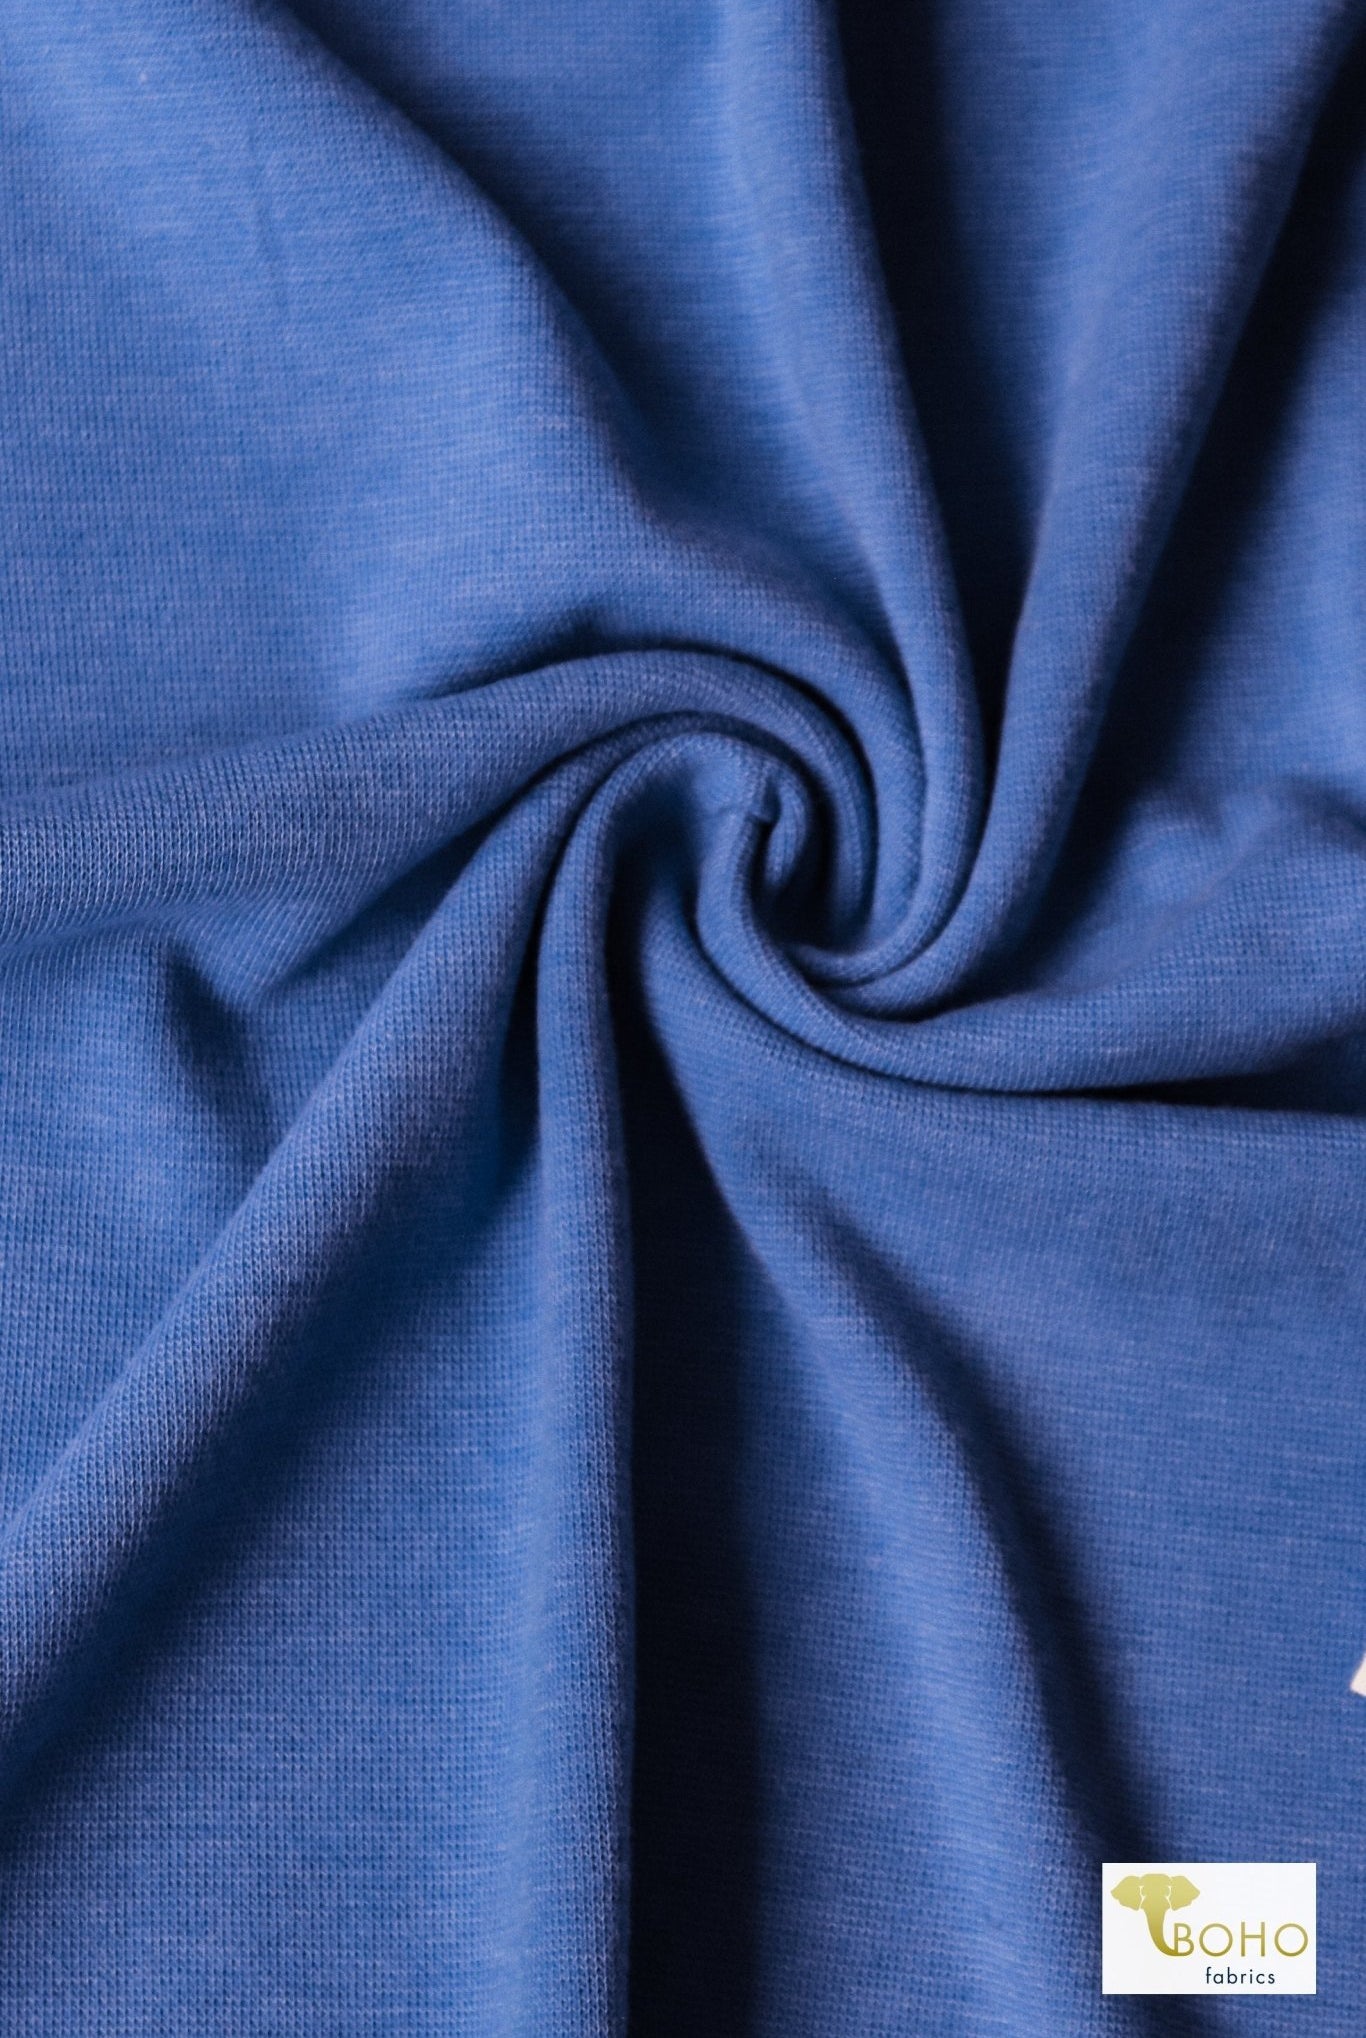 1x1 Rib Knit, Cornflower Blue. SOLD BY THE HALF YARD! - Boho Fabrics